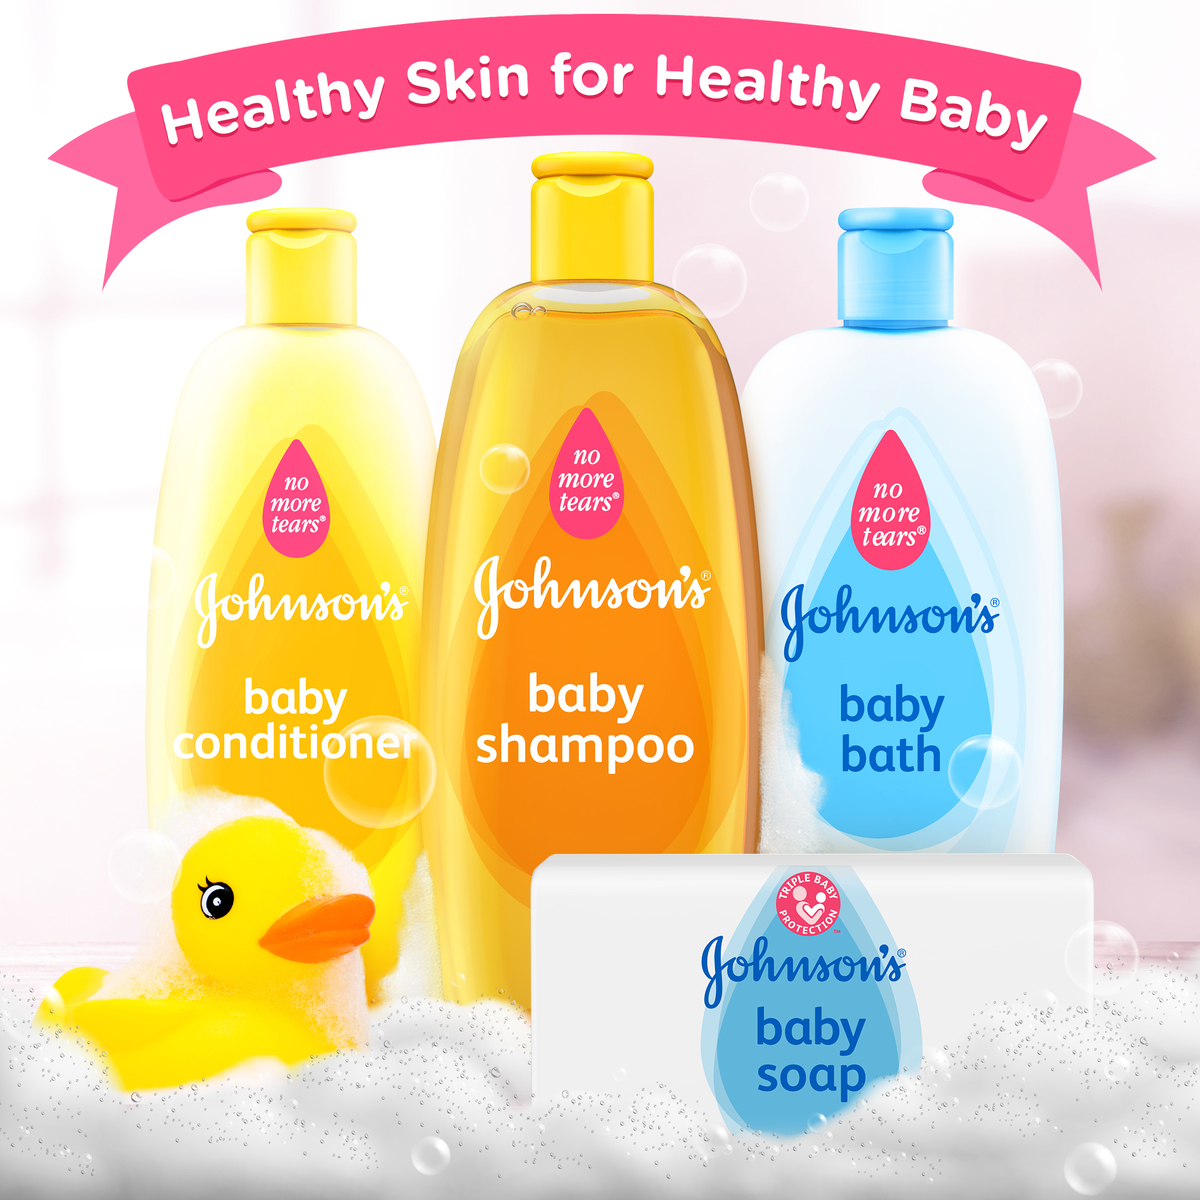 Johnson's Baby Soap 6 x 125 g